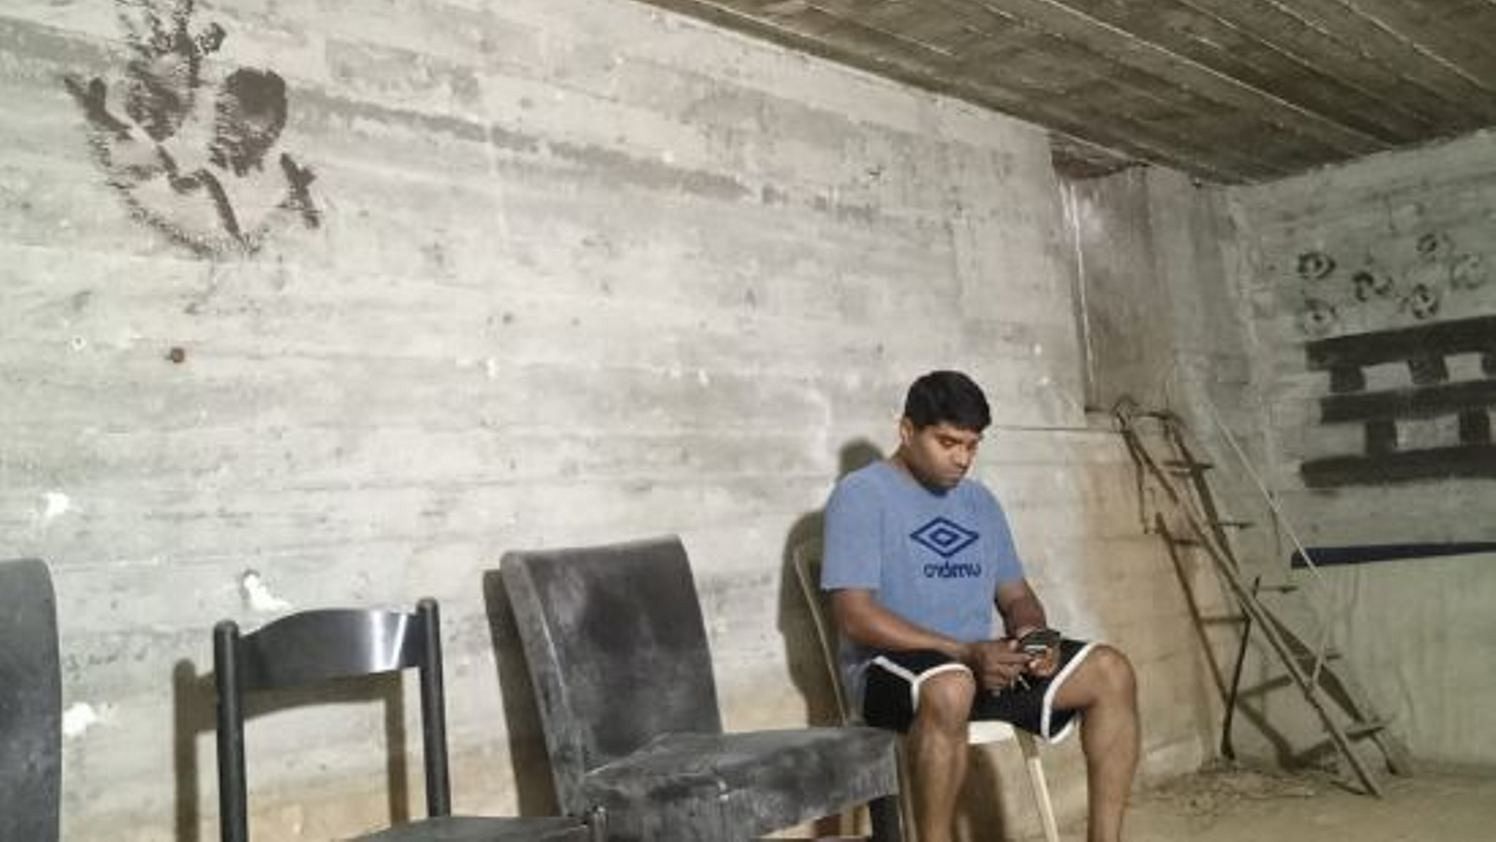 Praveen Pinto from Kinnigoli near Mangaluru takes shelter at a bunker in Tel Aviv.